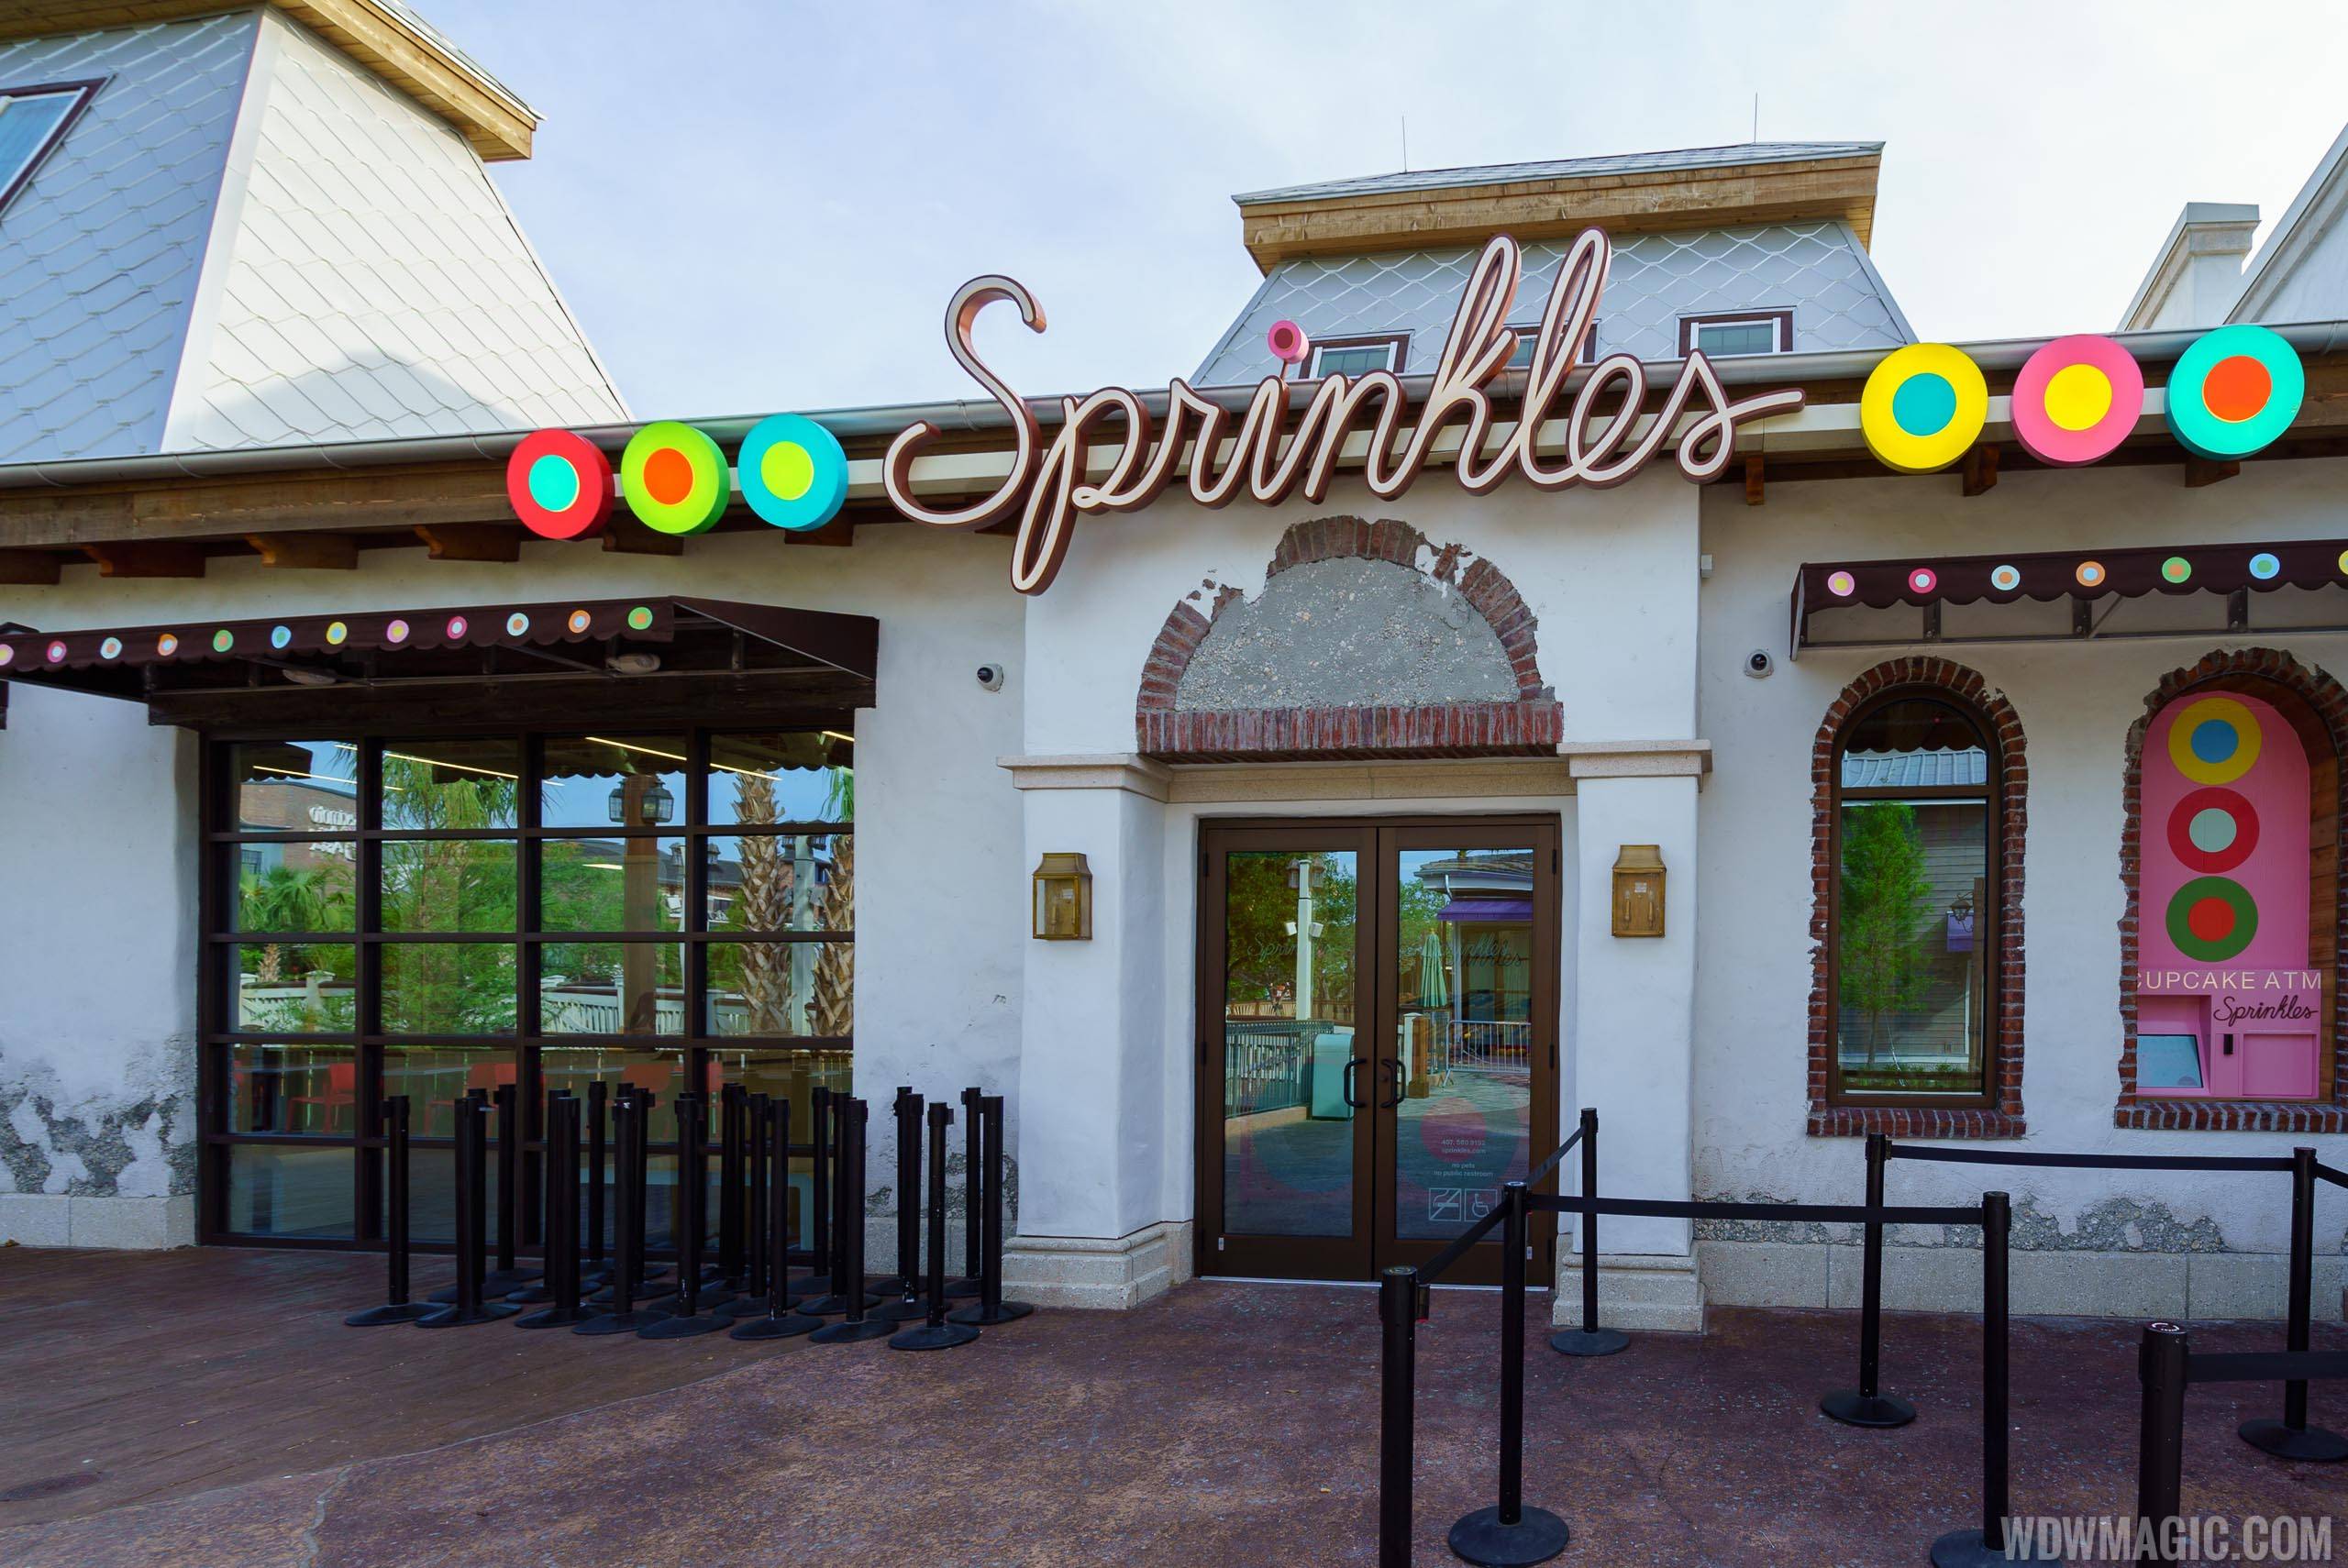 Entrance to Sprinkles at Disney Springs